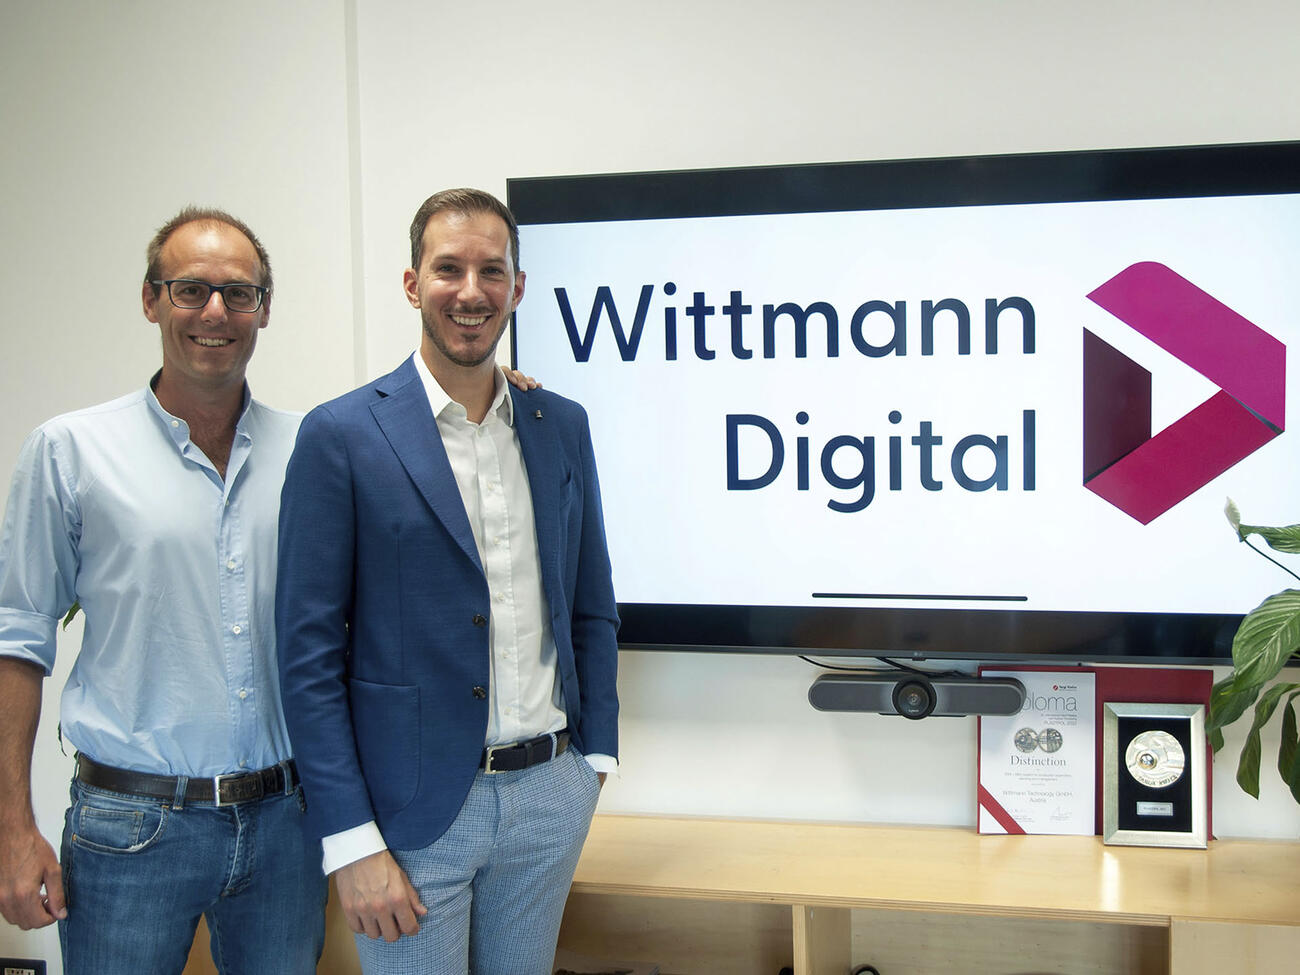 WITTMANN Digital - M.Pelagatti and G.Pigozzo